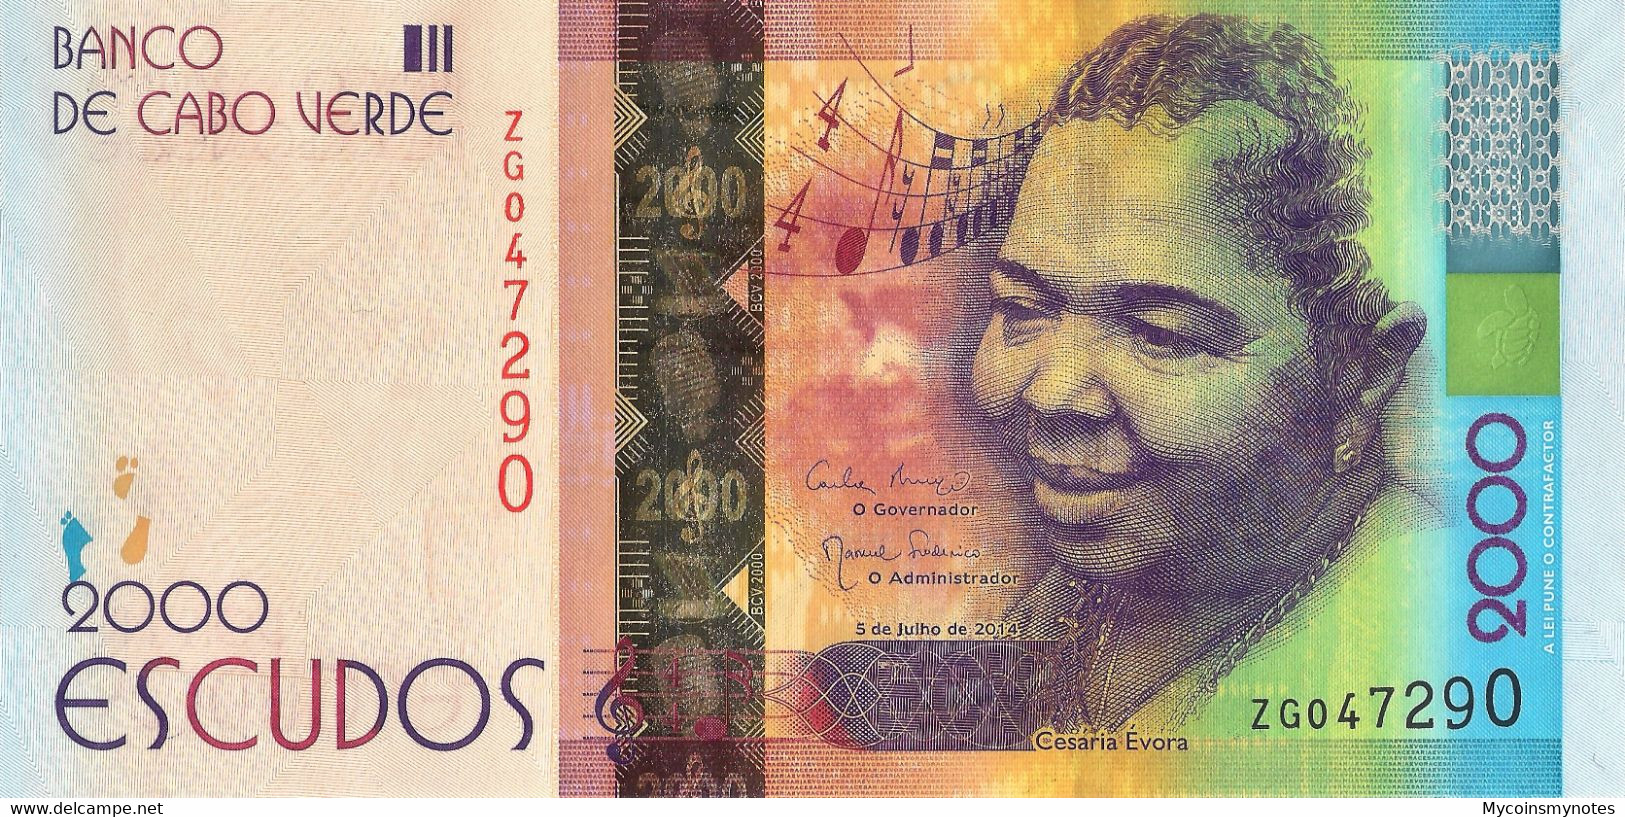 CAPE VERDE 2000 Escudos From 2014, P74, "Z" Replacement Banknote, UNC - Cap Verde